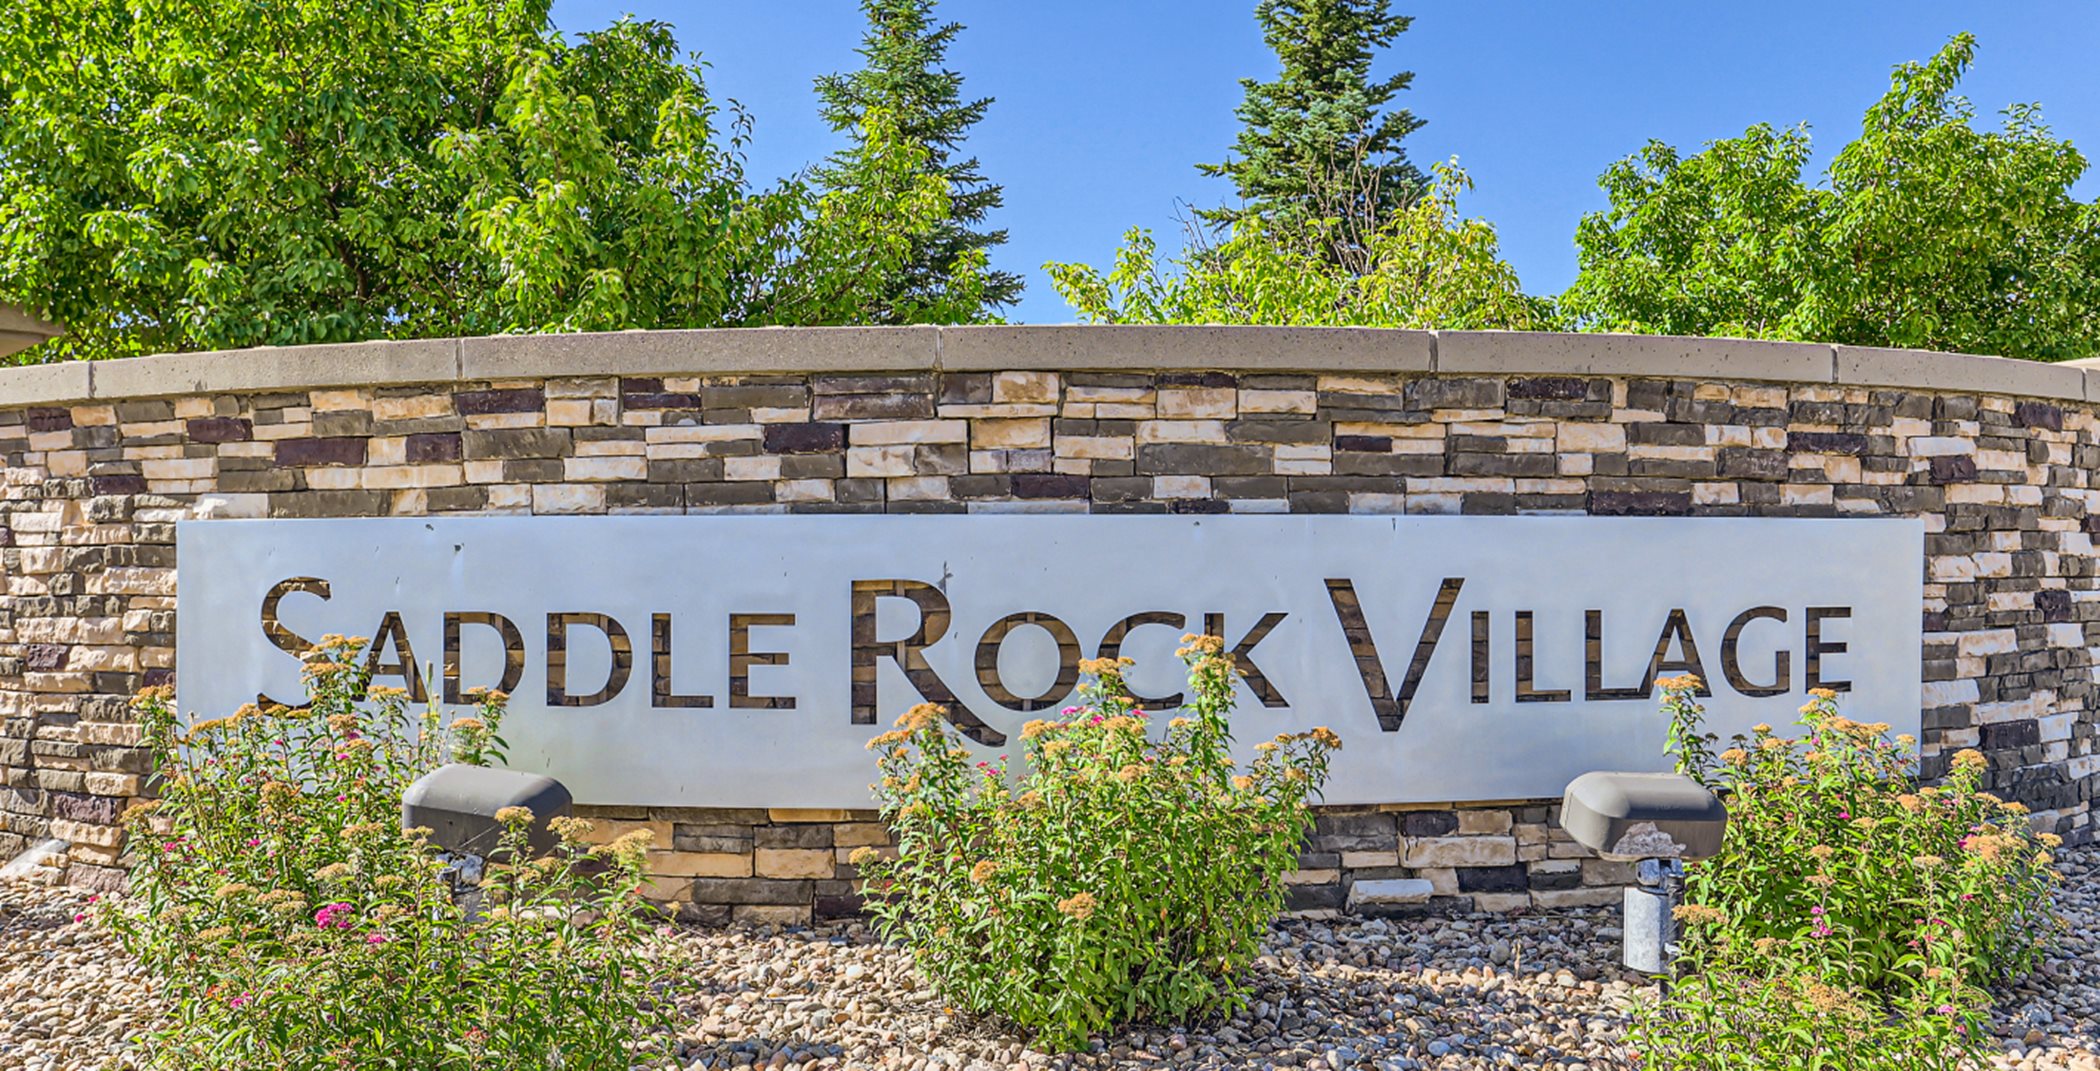 Saddle Rock Village